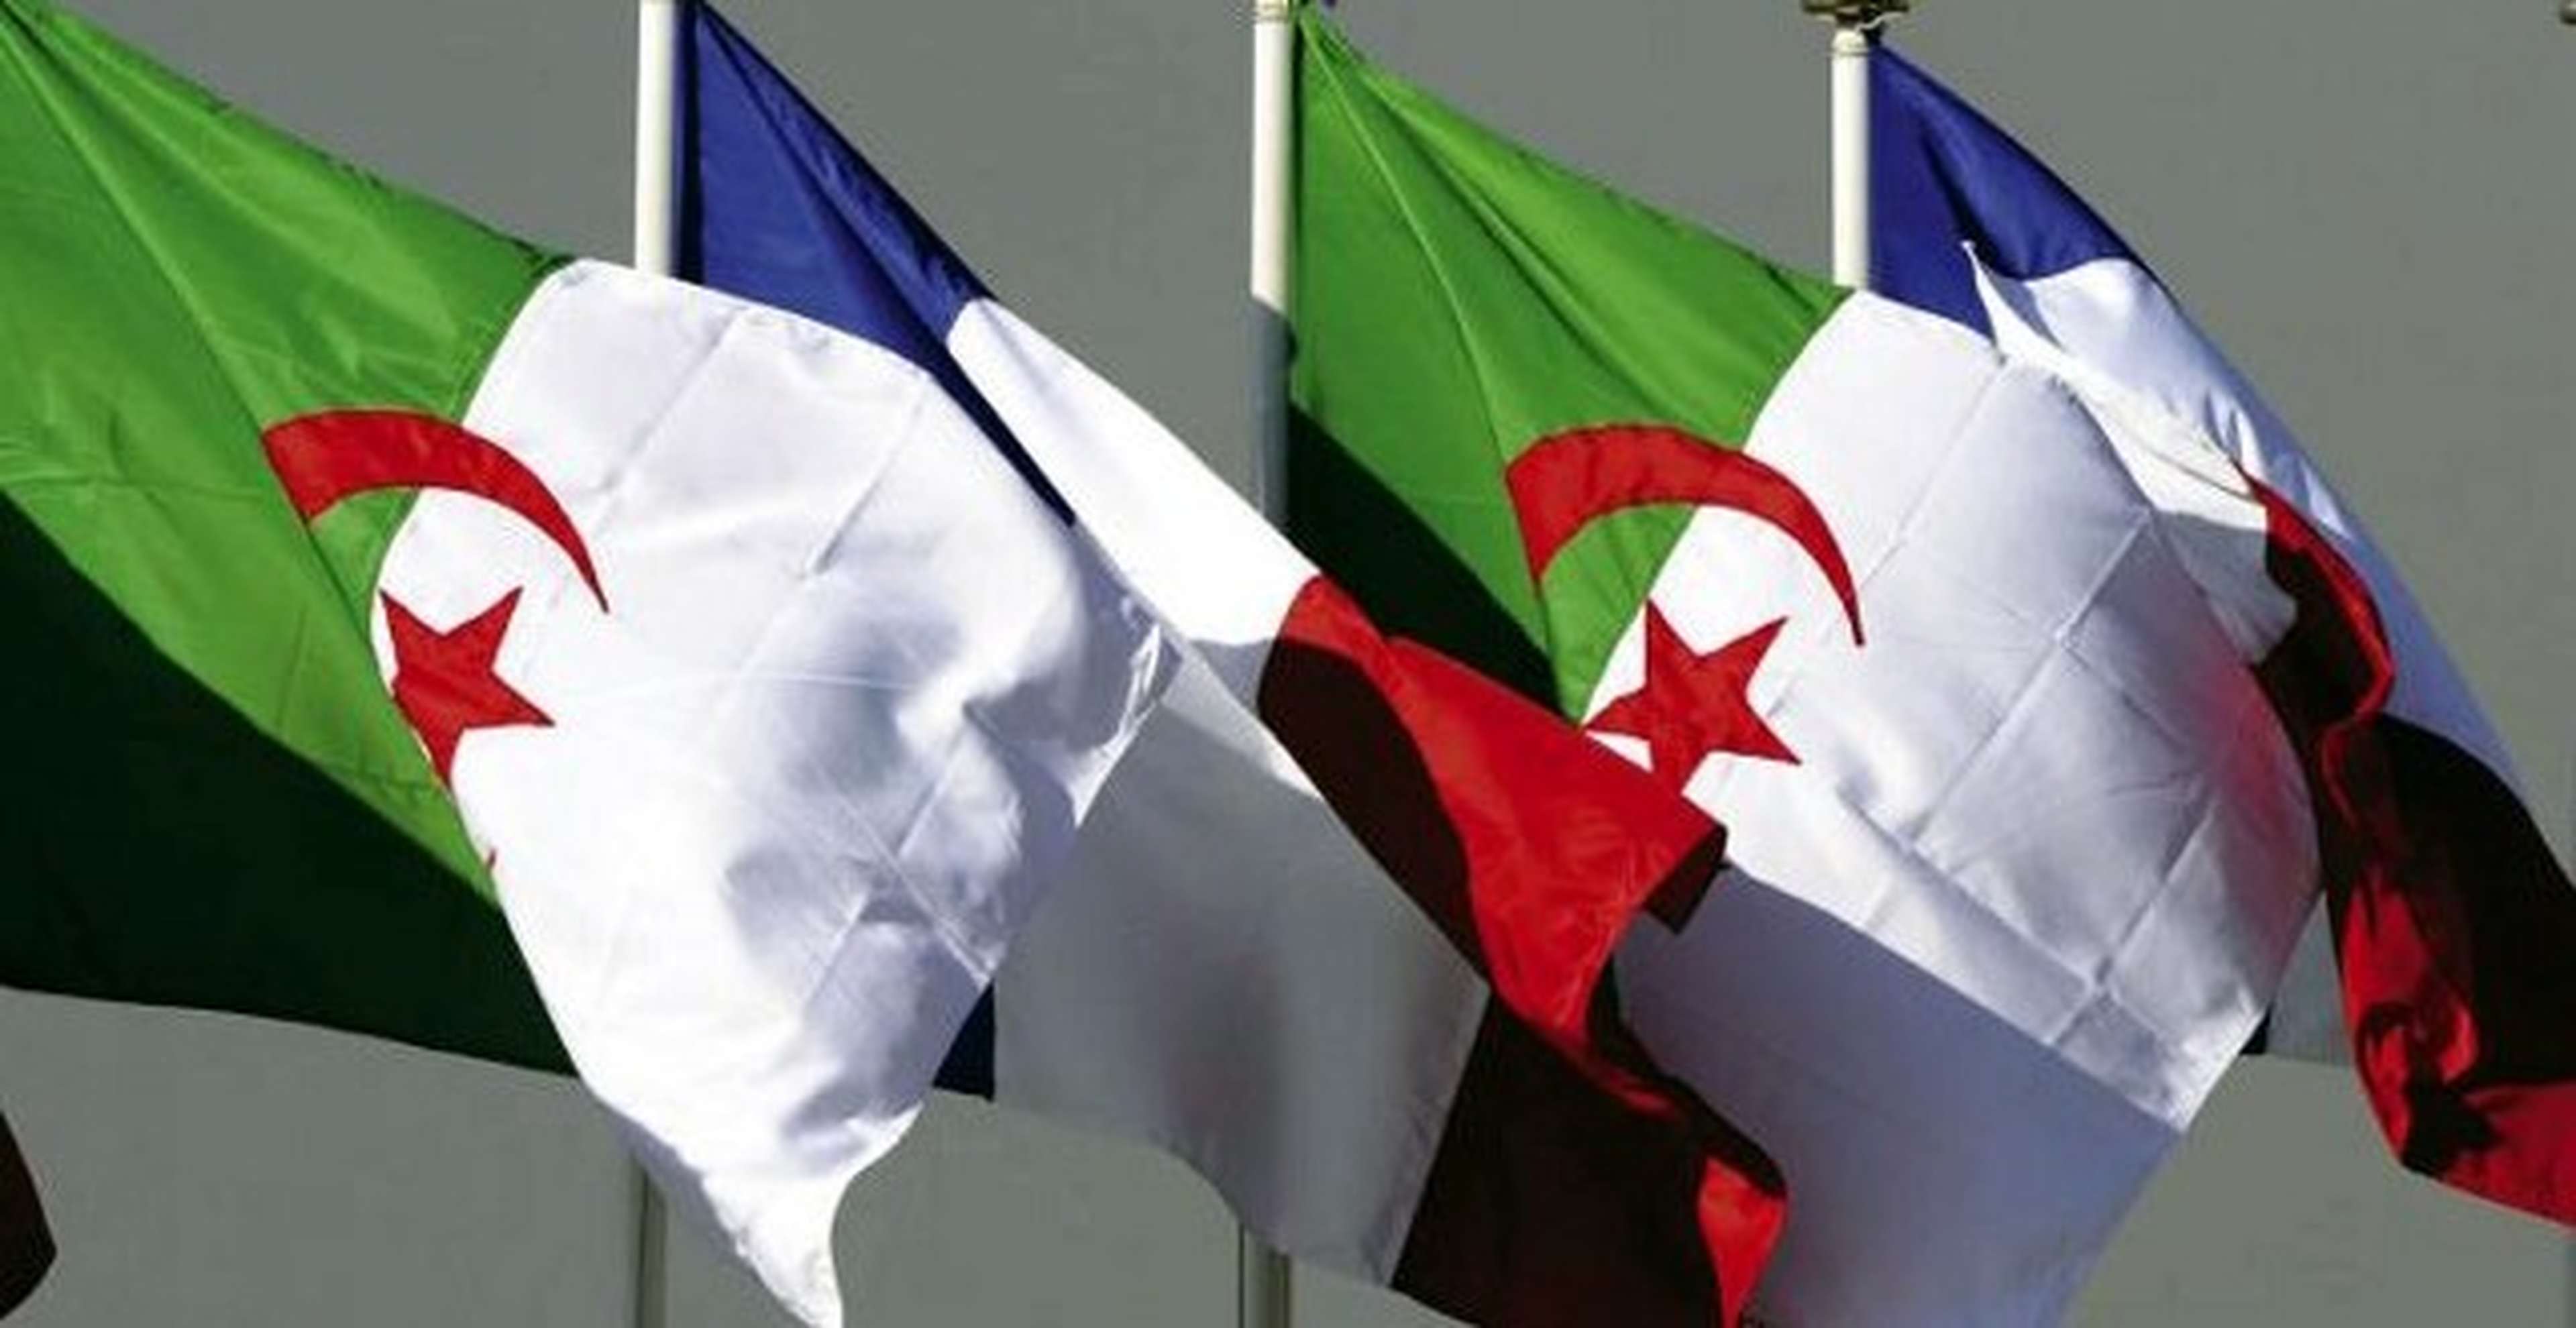 /2021/04/Algerie France ennemi traditionnel et eternel ministre jean castex sommet visite affront diplomatique